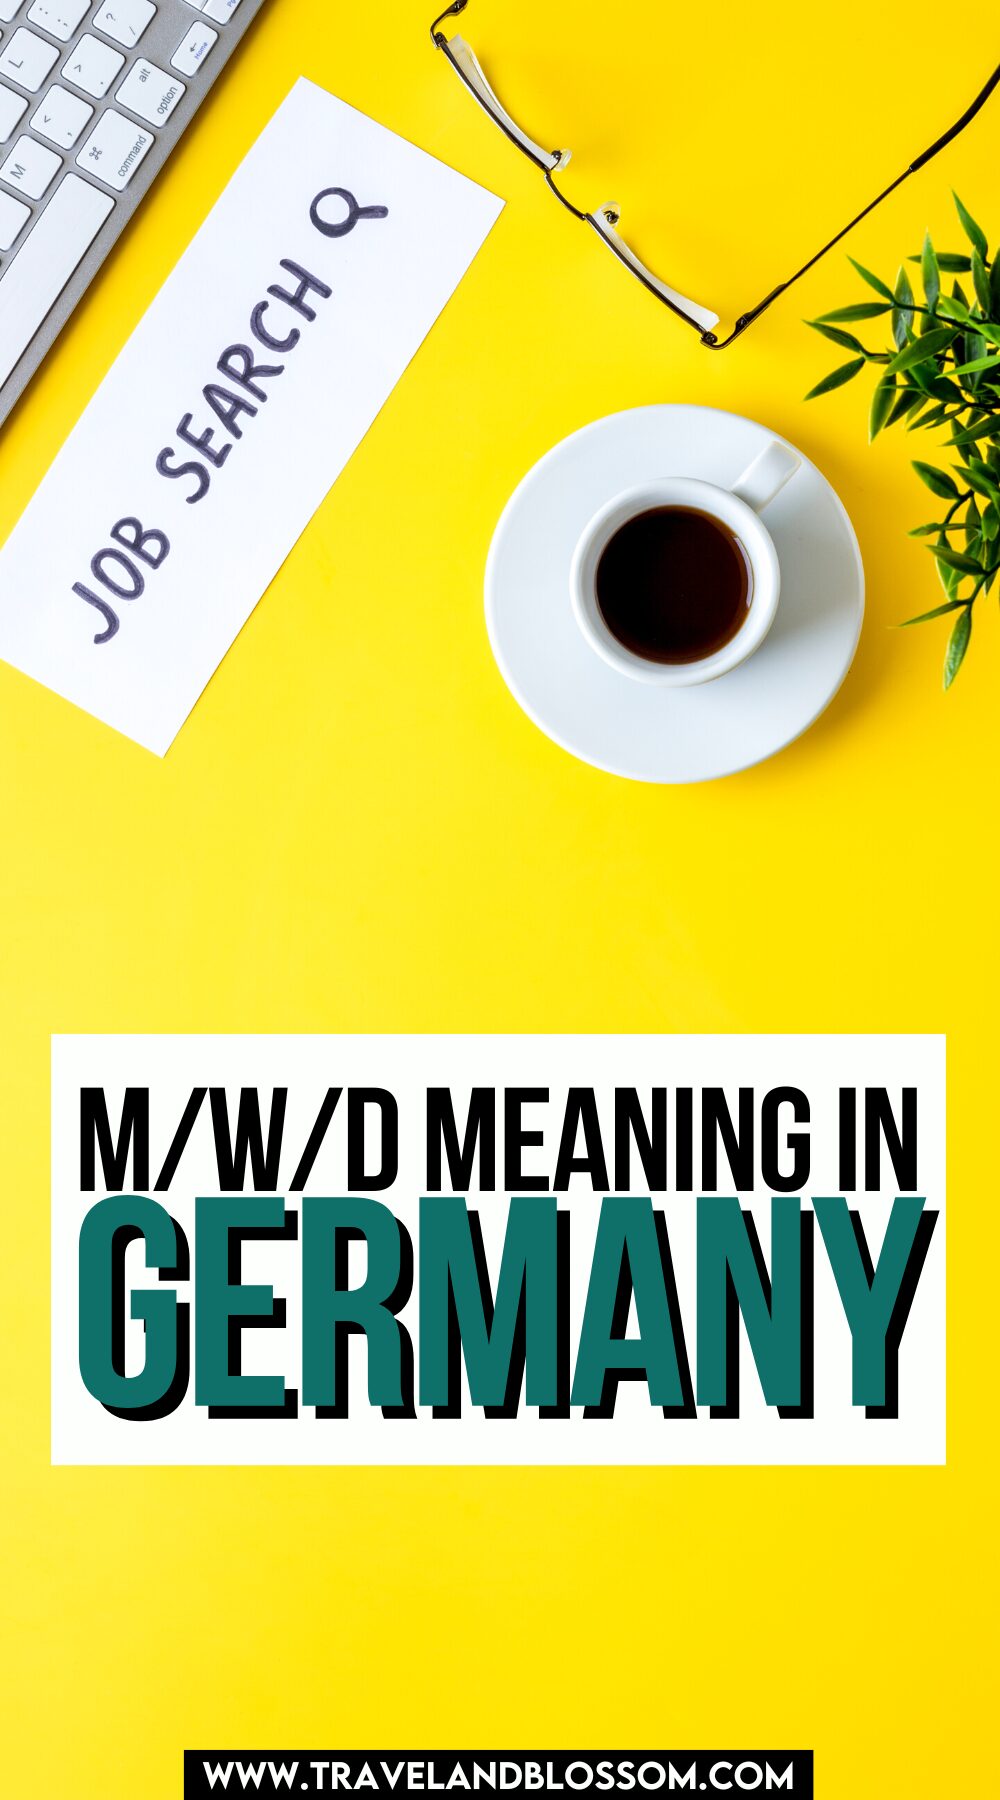 The M/W/D Meaning in German Job Postings